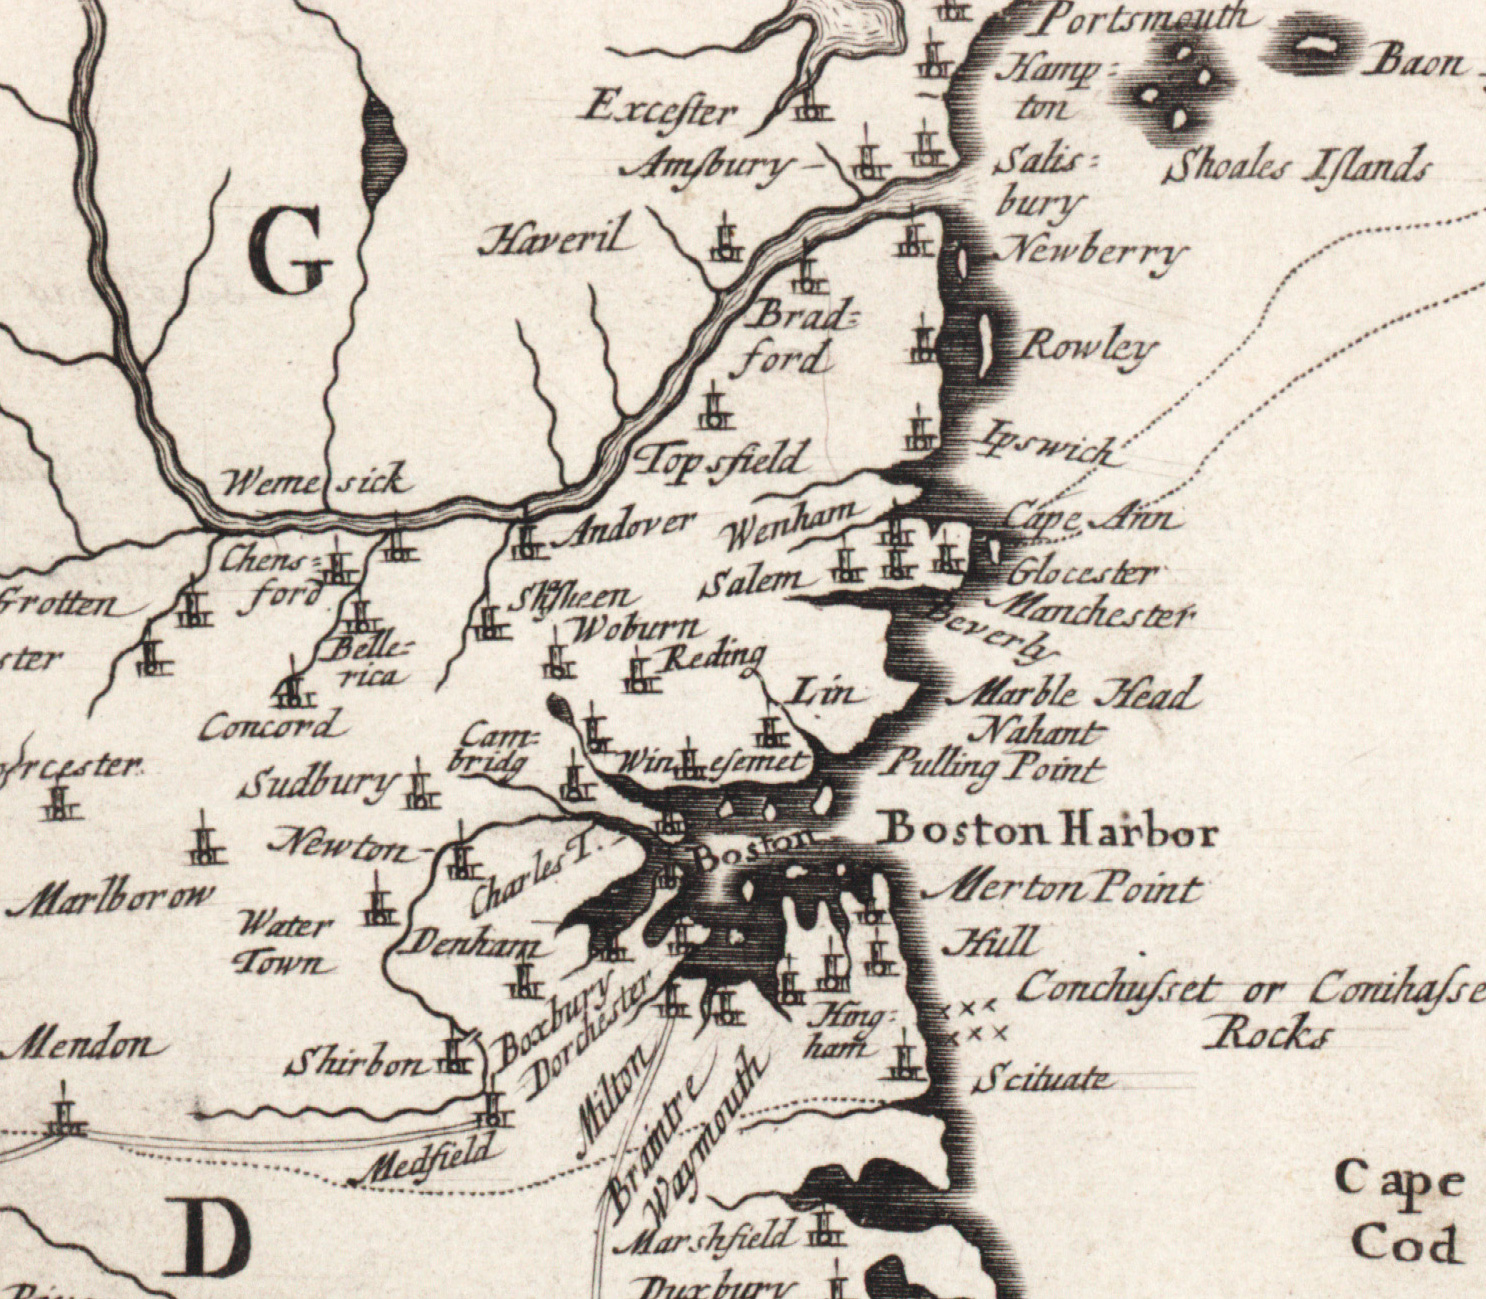 Ipswich in 1702